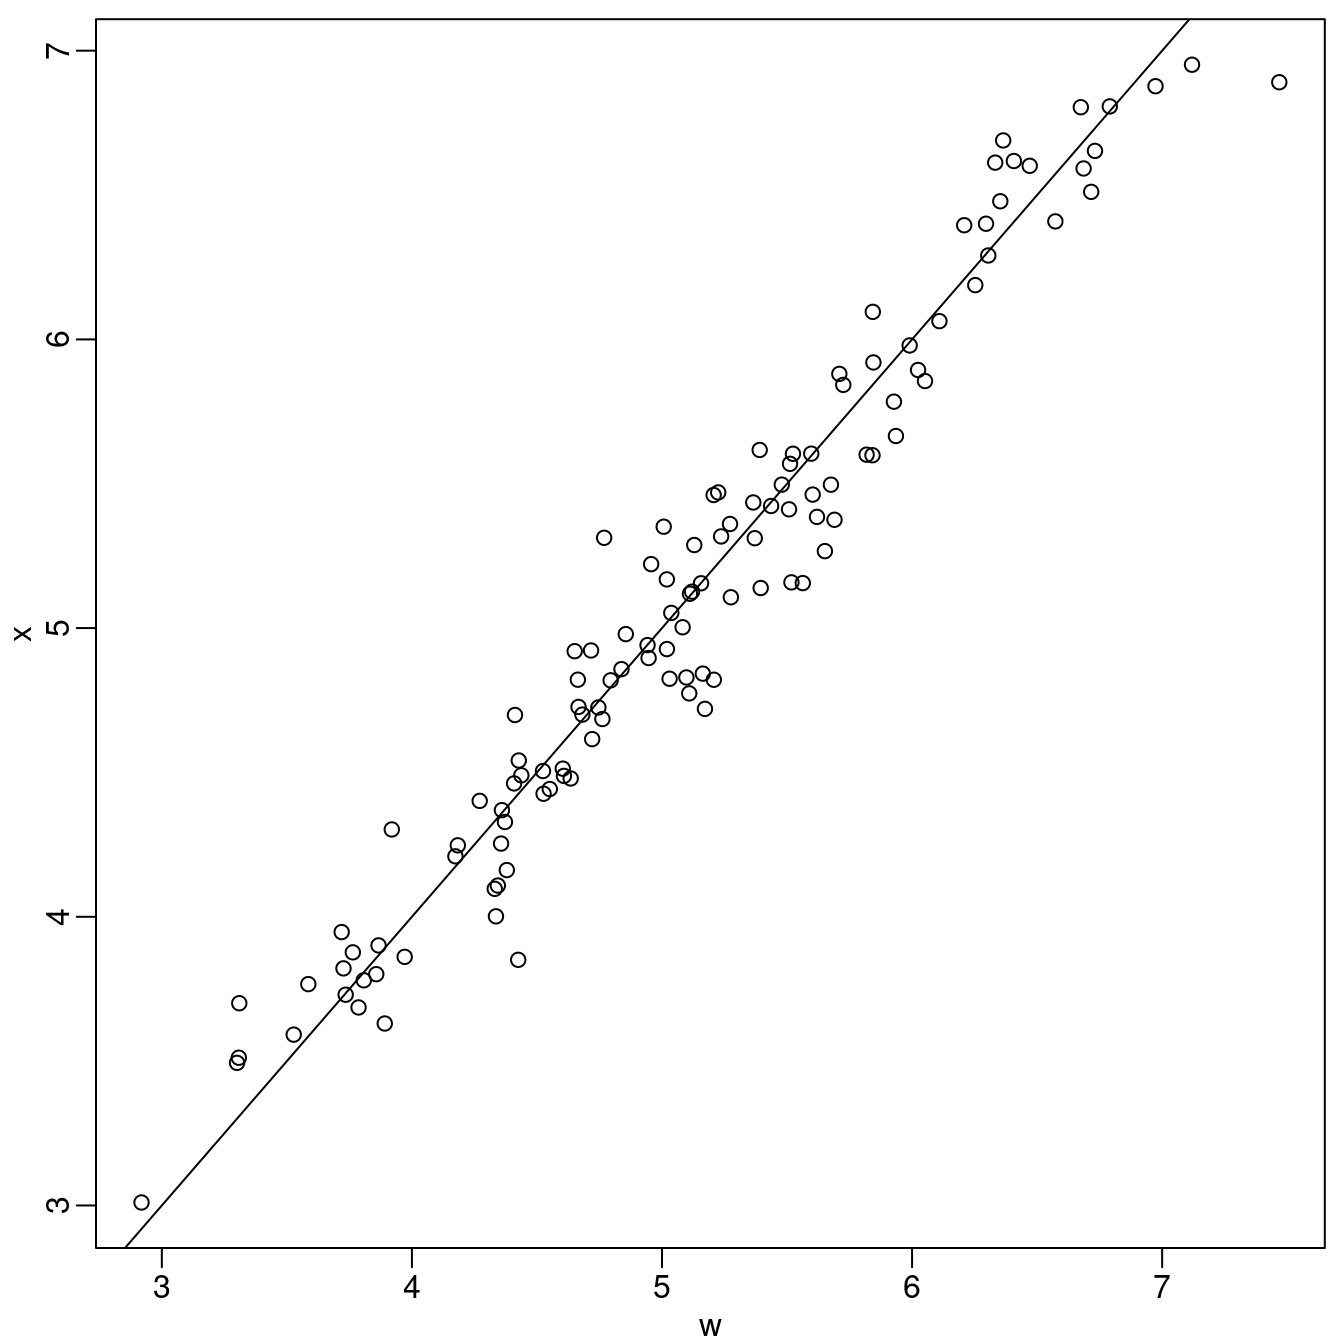 Simulated values of $\mathbf{x}$ versus $\mathbf{w}$.